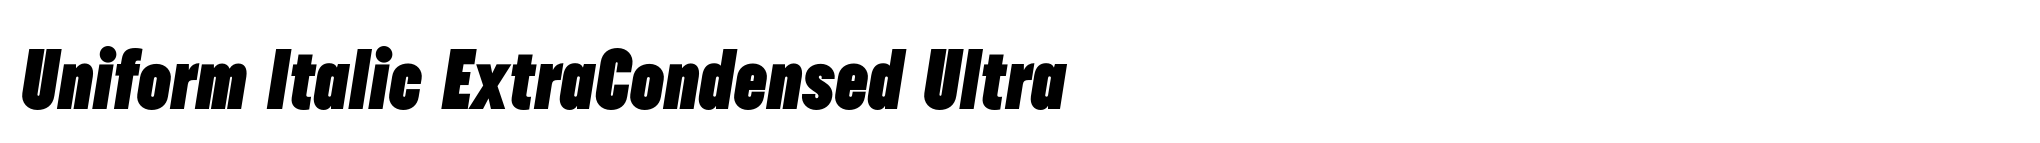 Uniform Italic ExtraCondensed Ultra image